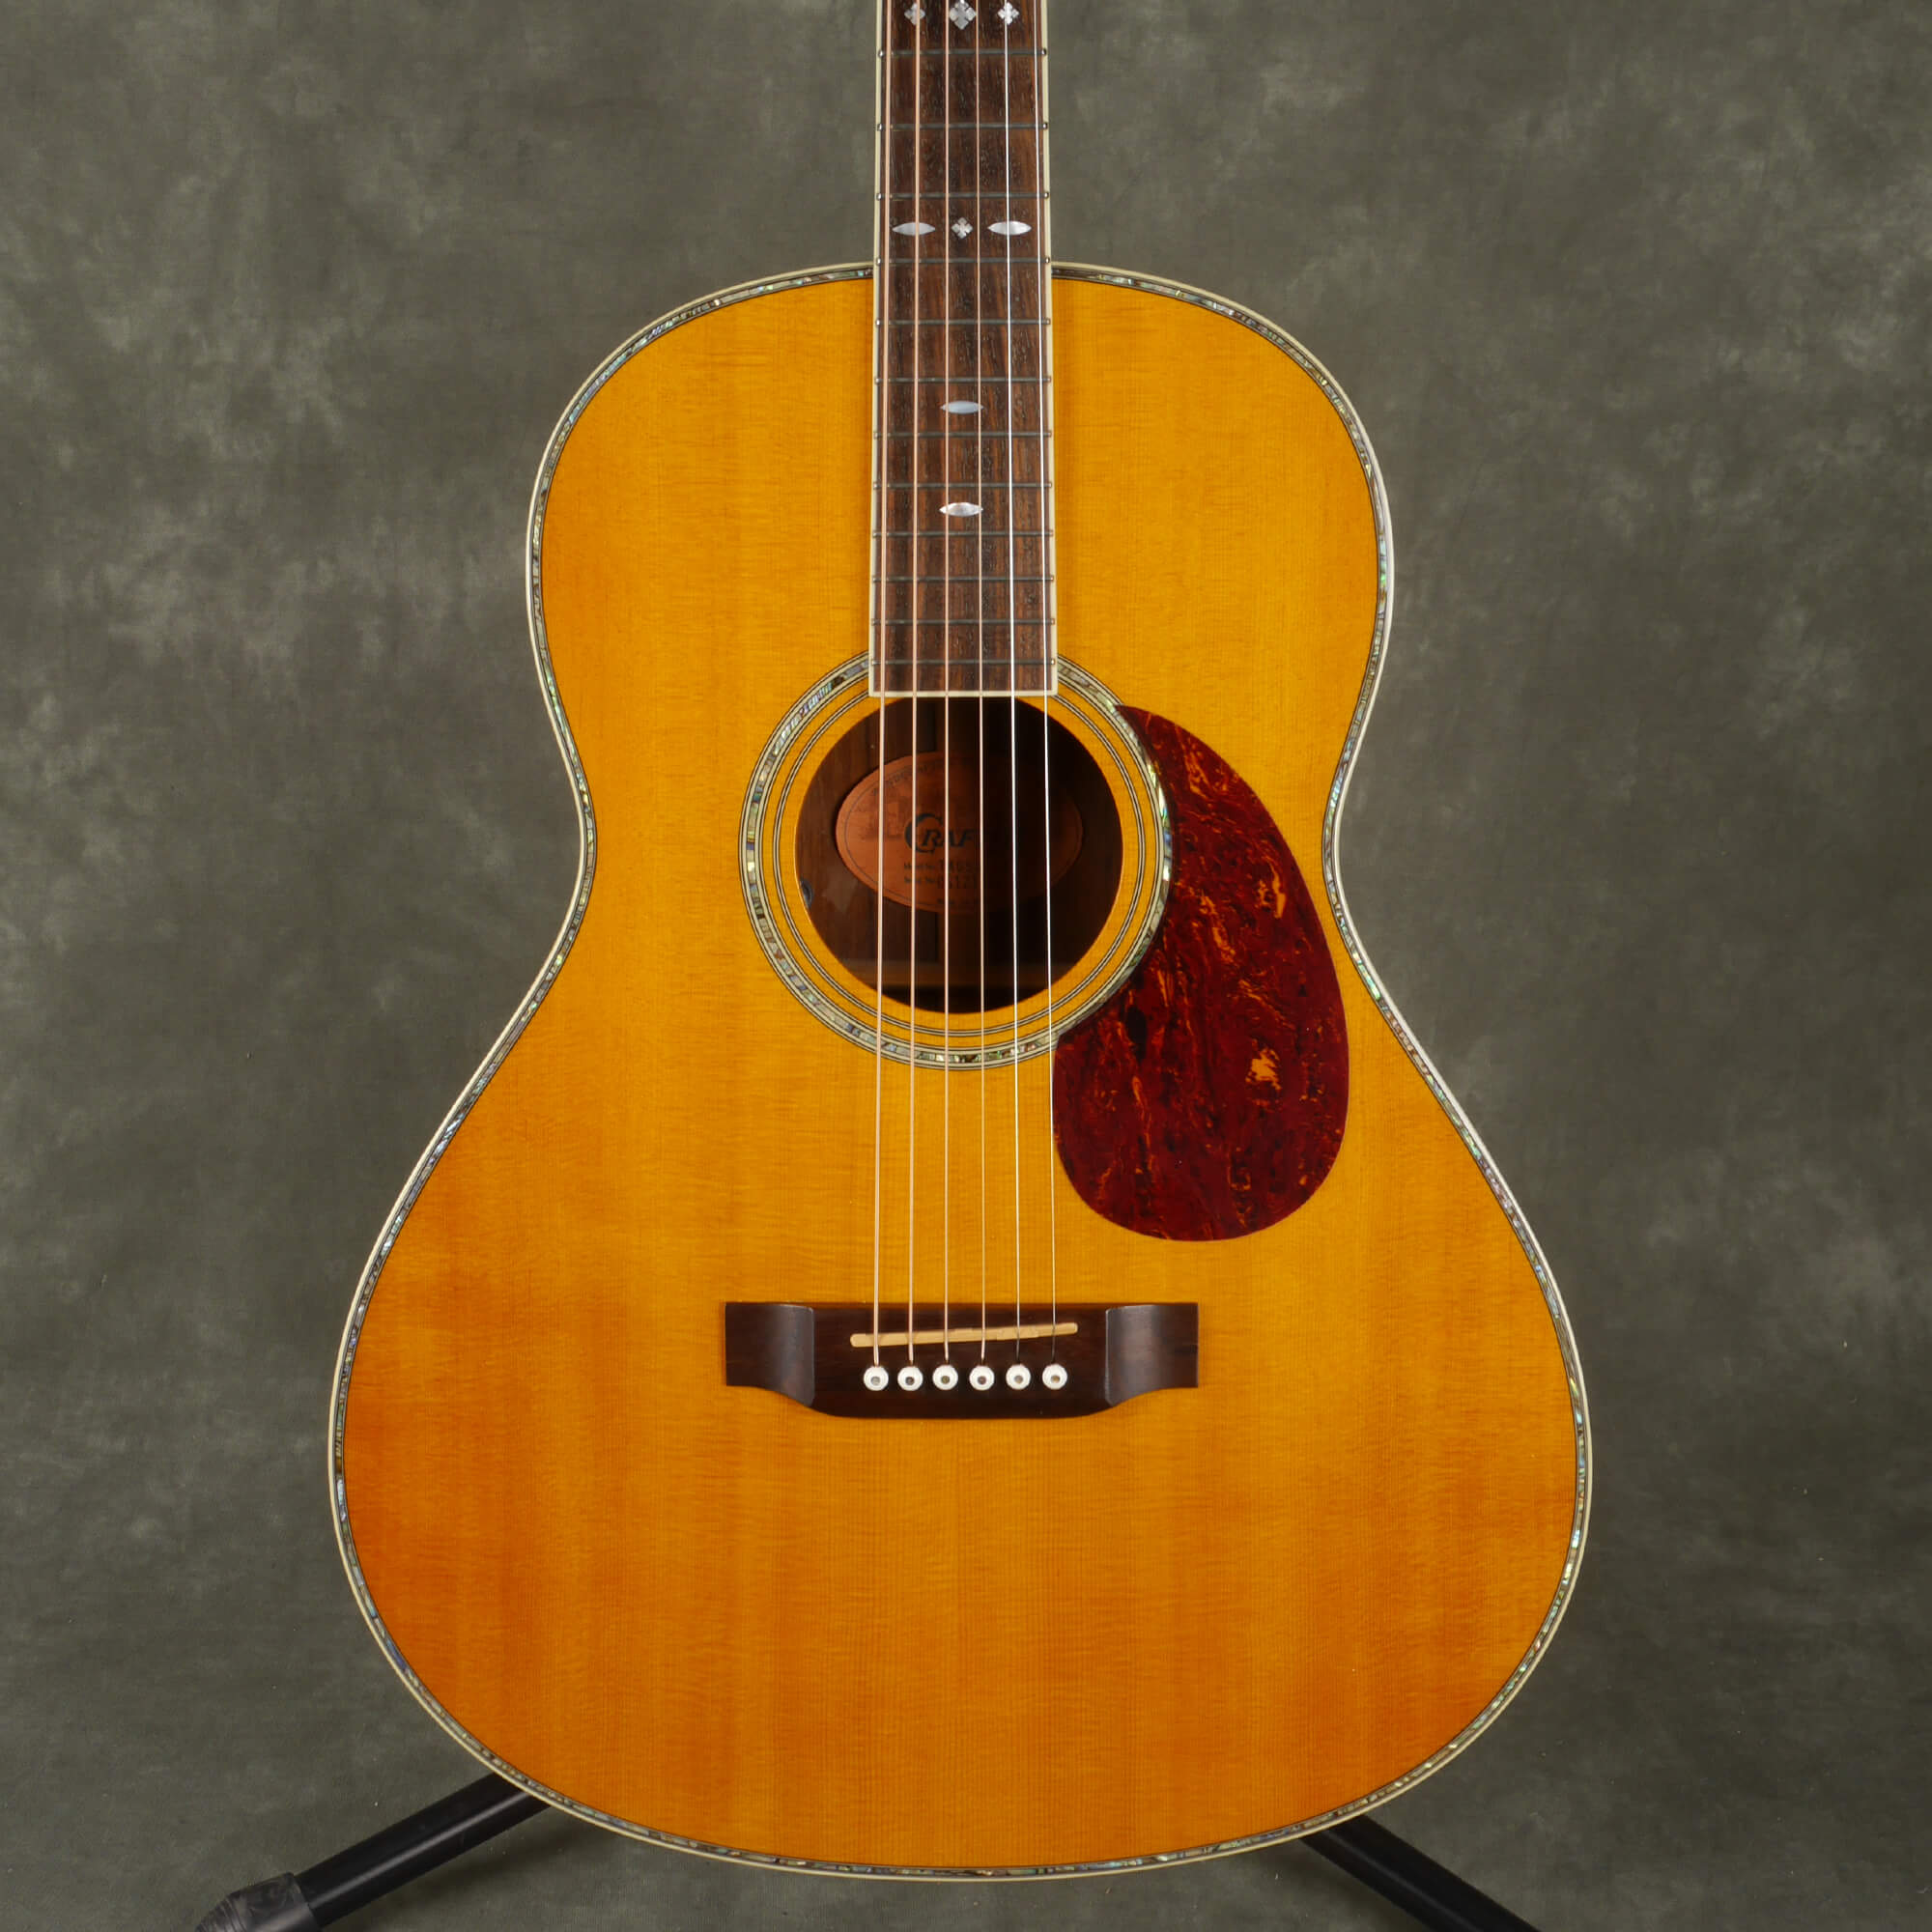 egmond acoustic guitar serial number 76210147